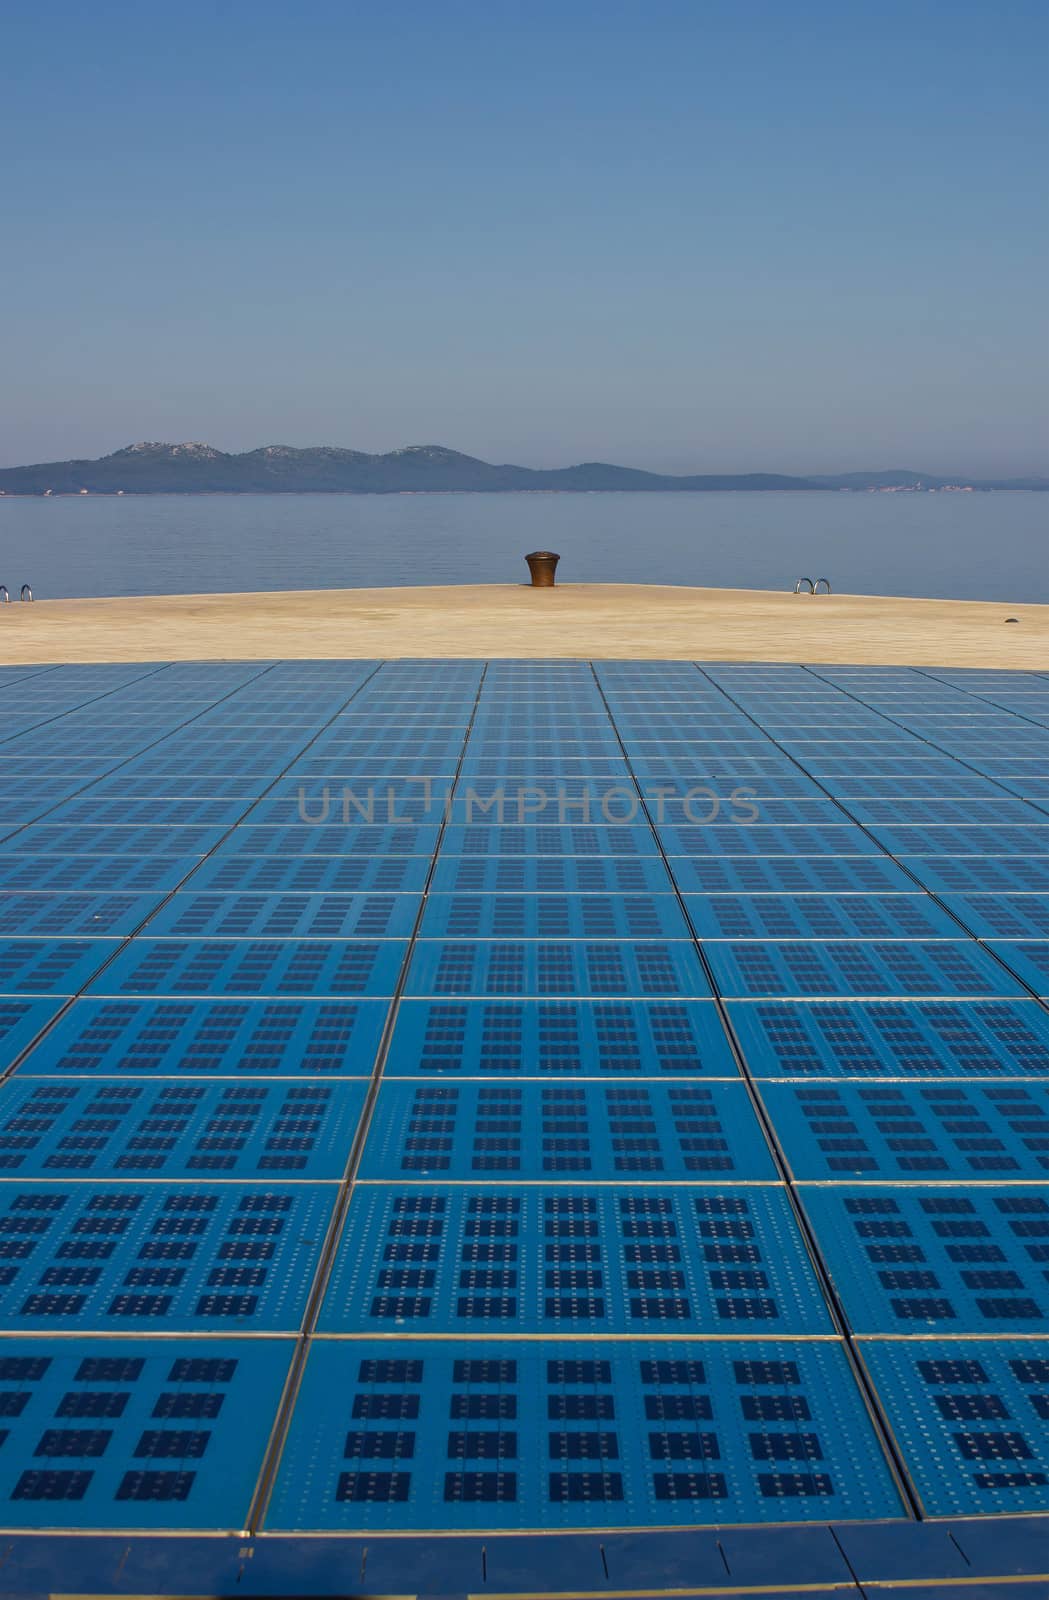 Greetings to the sun Zadar installation by xbrchx